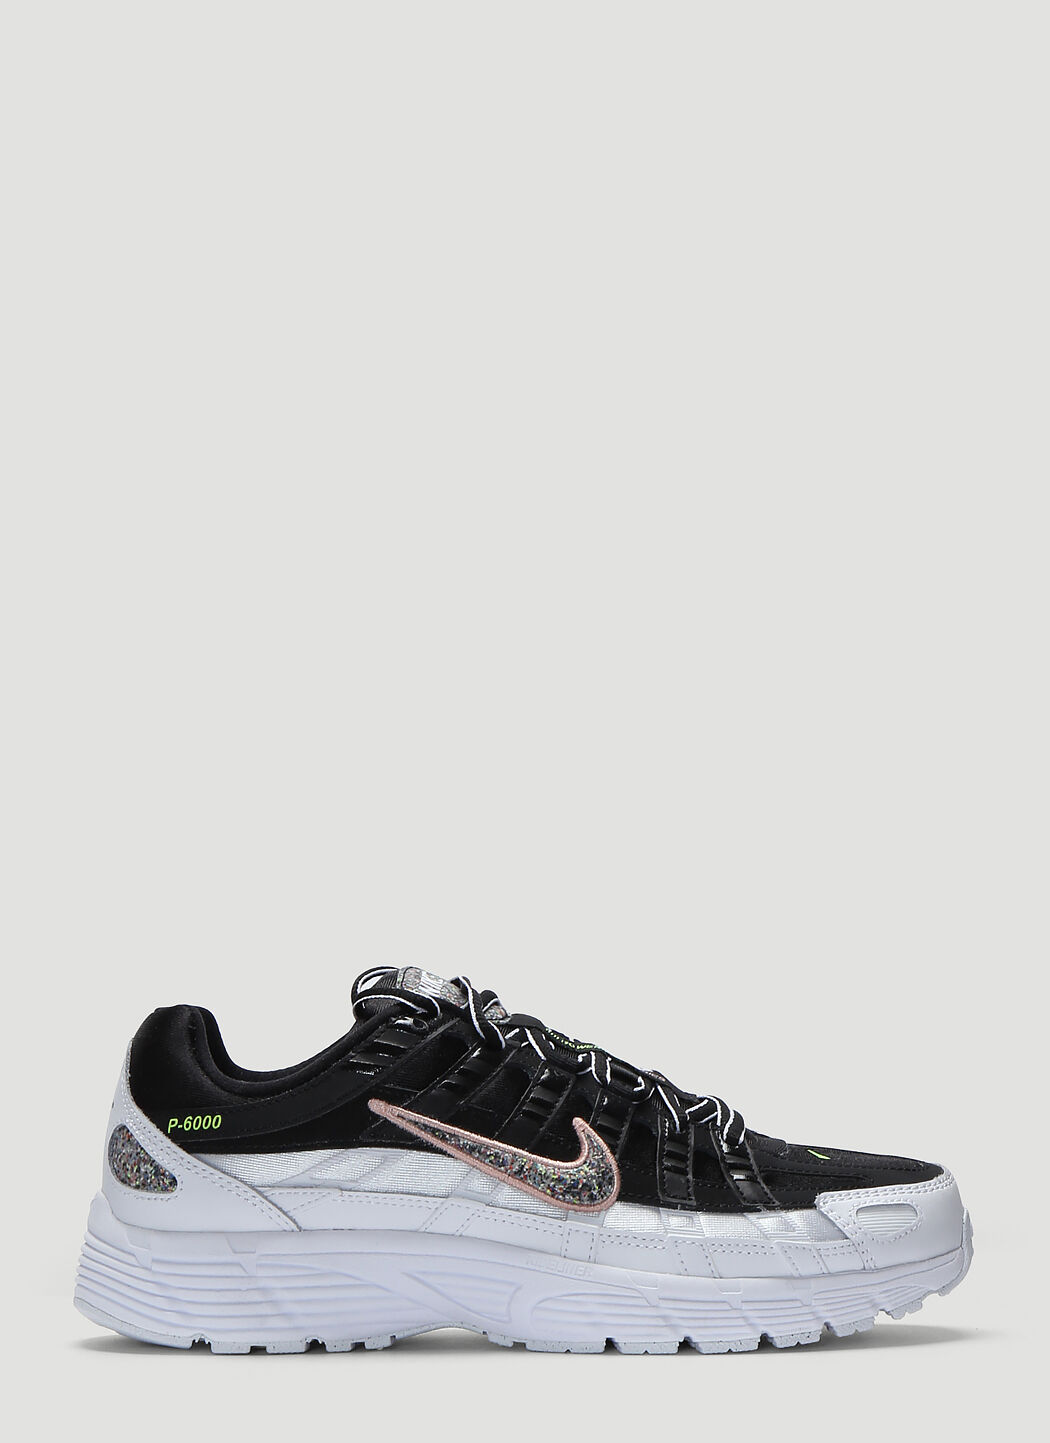 Nike P-6000 Sneakers White nik0247002